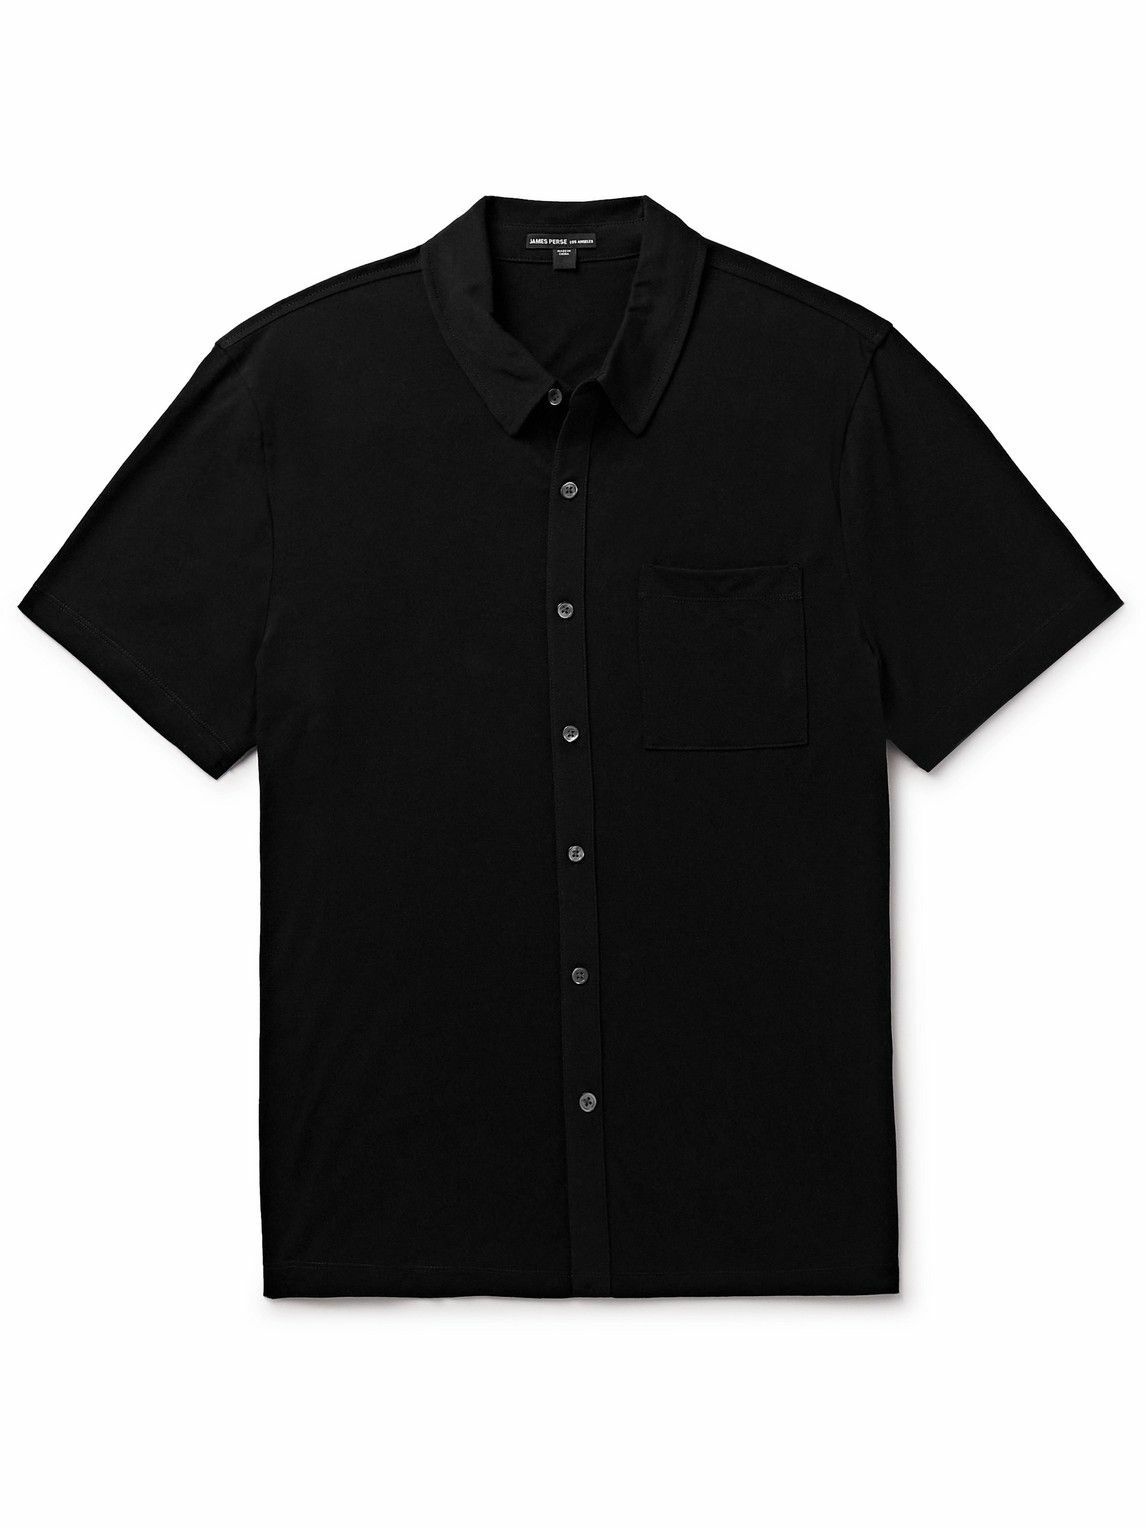 James Perse - Slim-Fit Cotton Shirt - Black James Perse